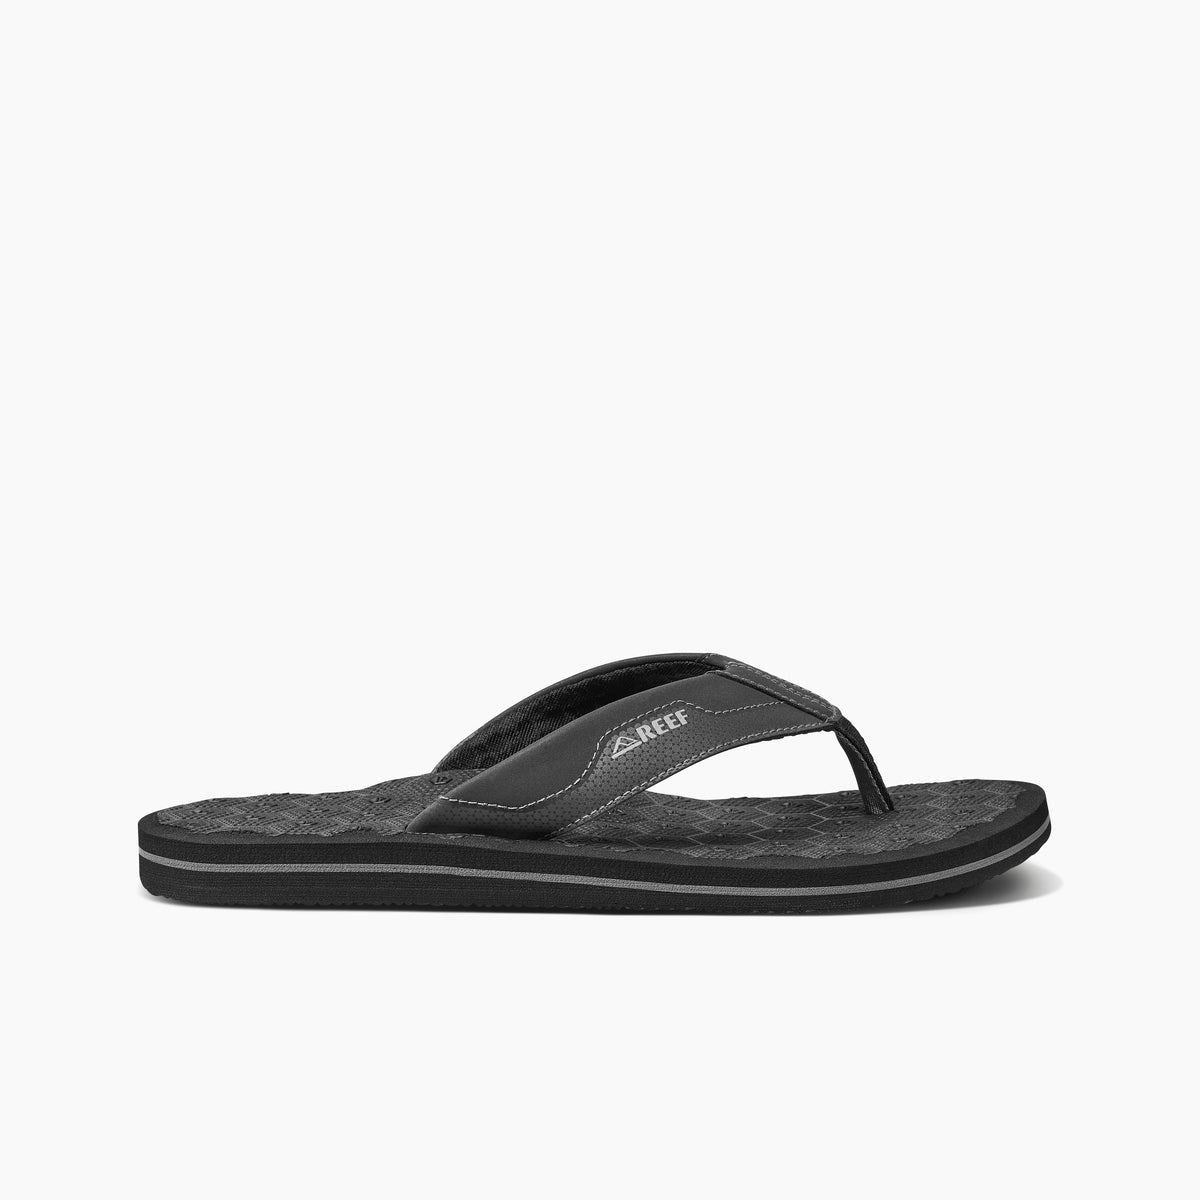 Men's Ripper Sandal in Black/Tan | REEF®